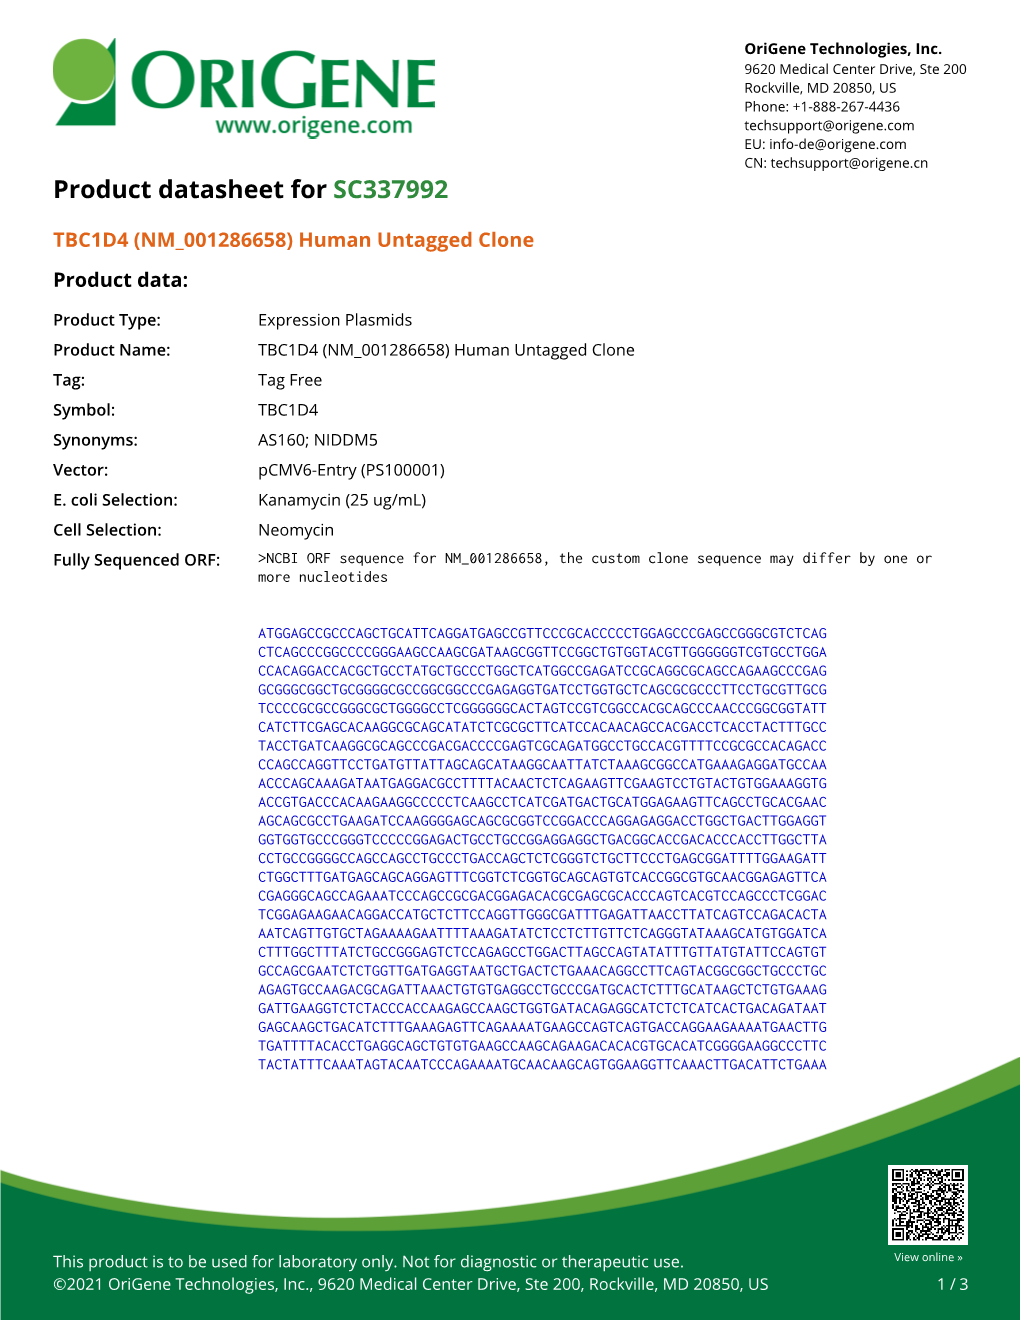 TBC1D4 (NM 001286658) Human Untagged Clone Product Data